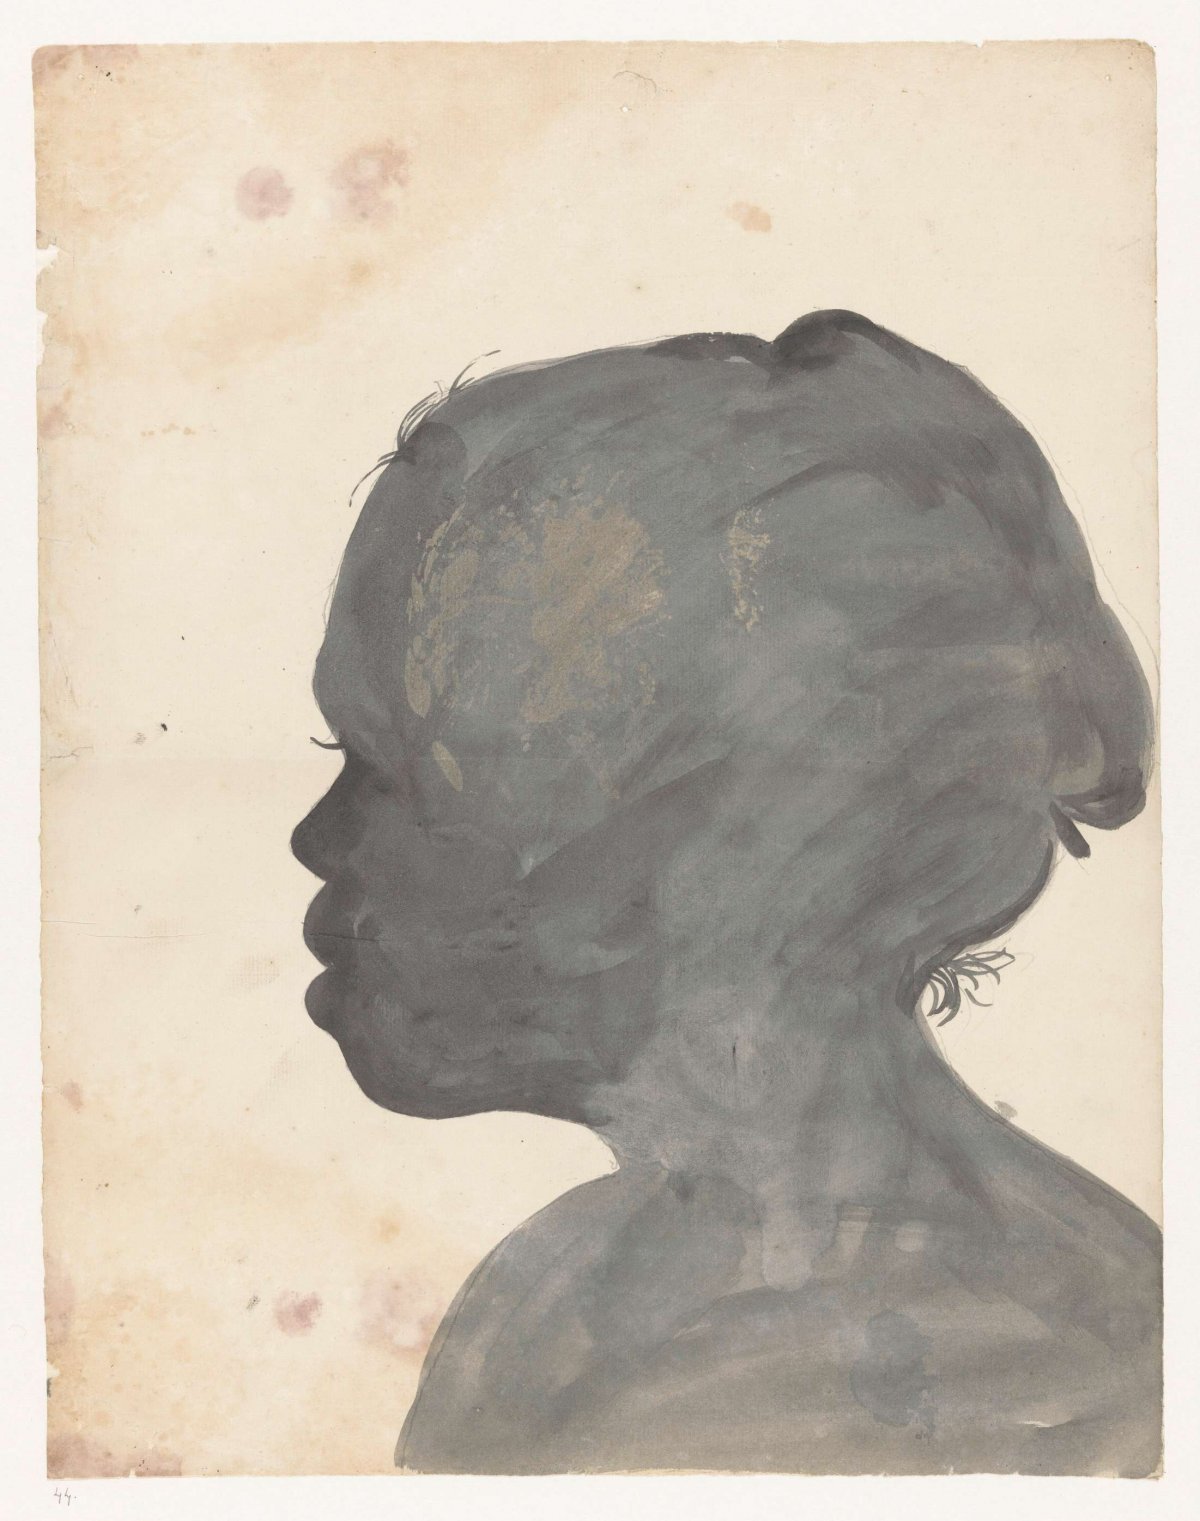 Silhouette portrait of Bietja, Jan Brandes, 1783 - 1784